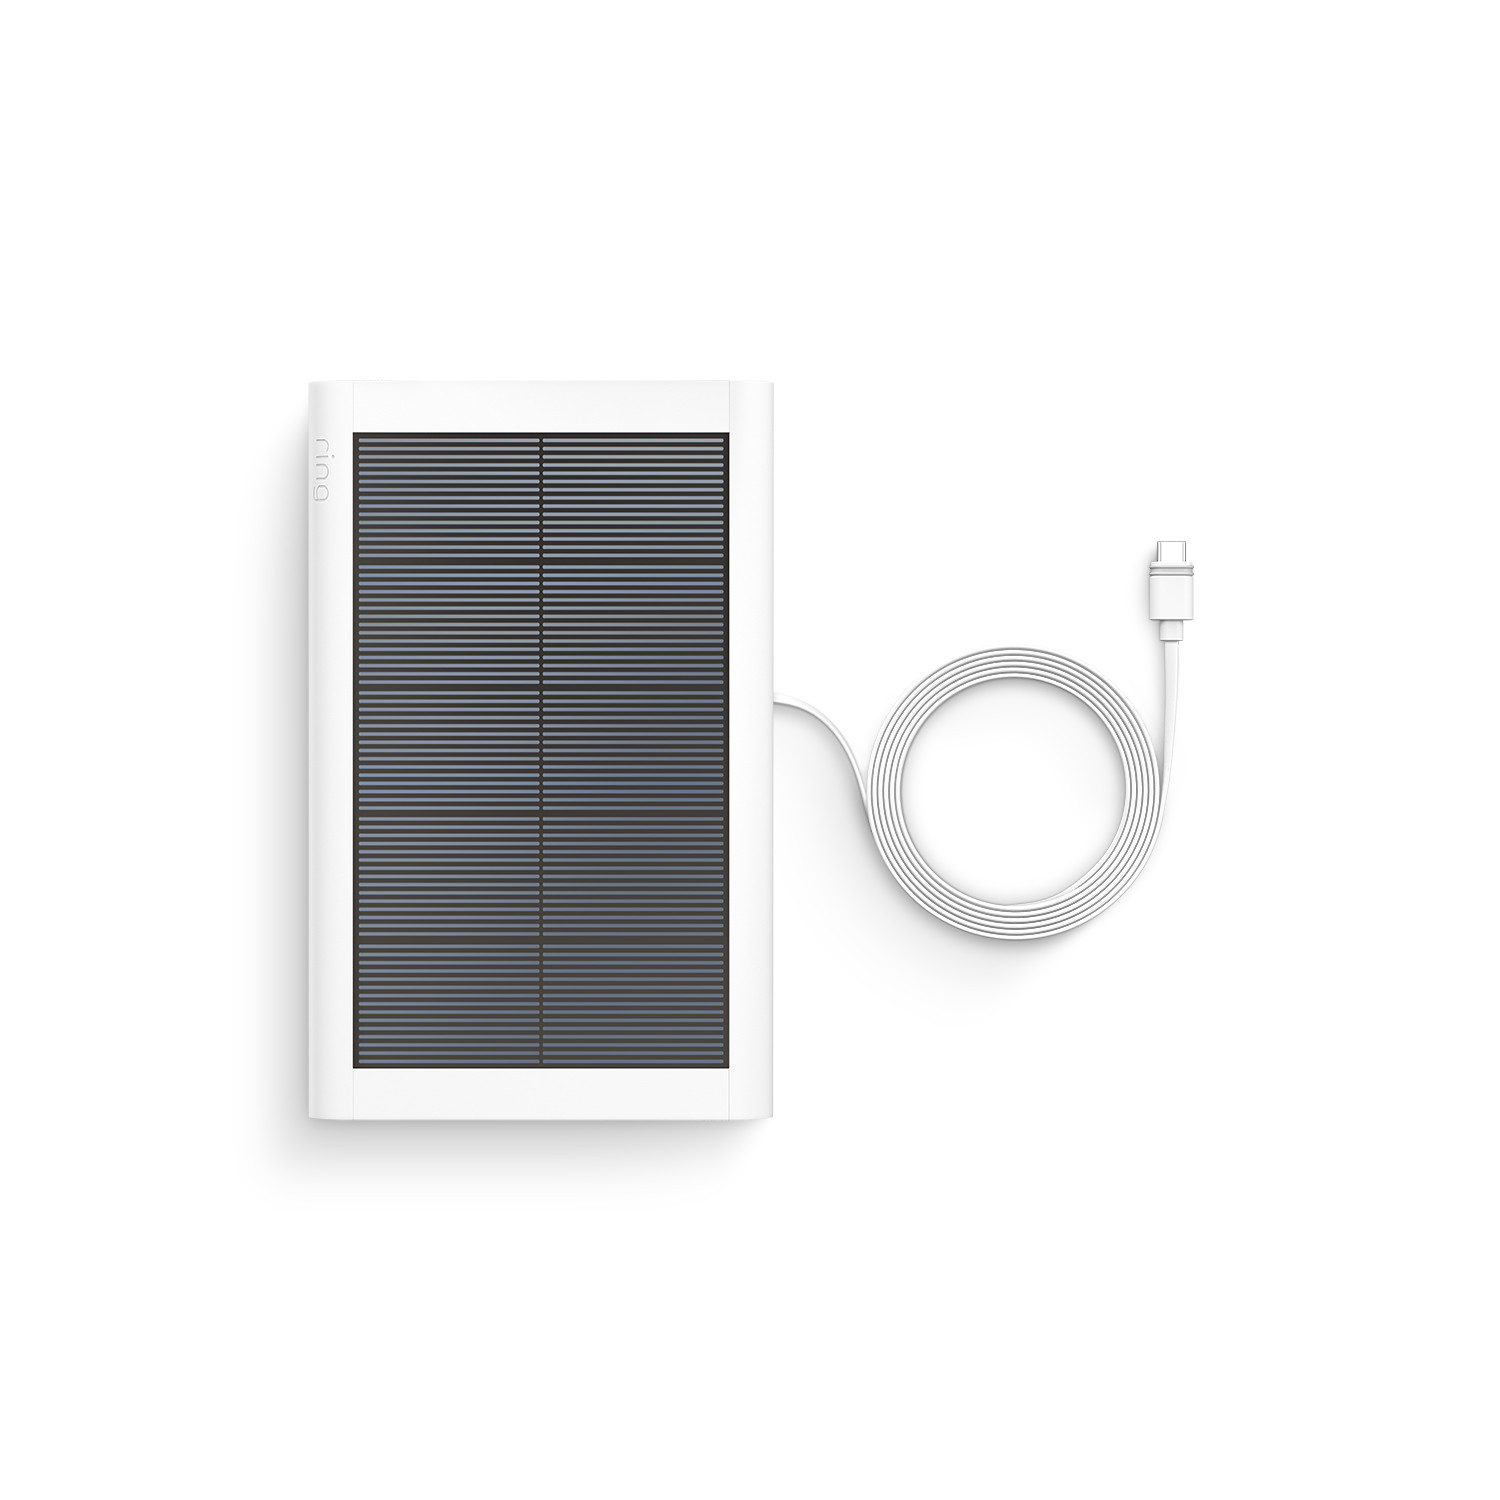 840268956271 | Ring Small Solar Panel, 1.9W, White (B09YGLYSDM)